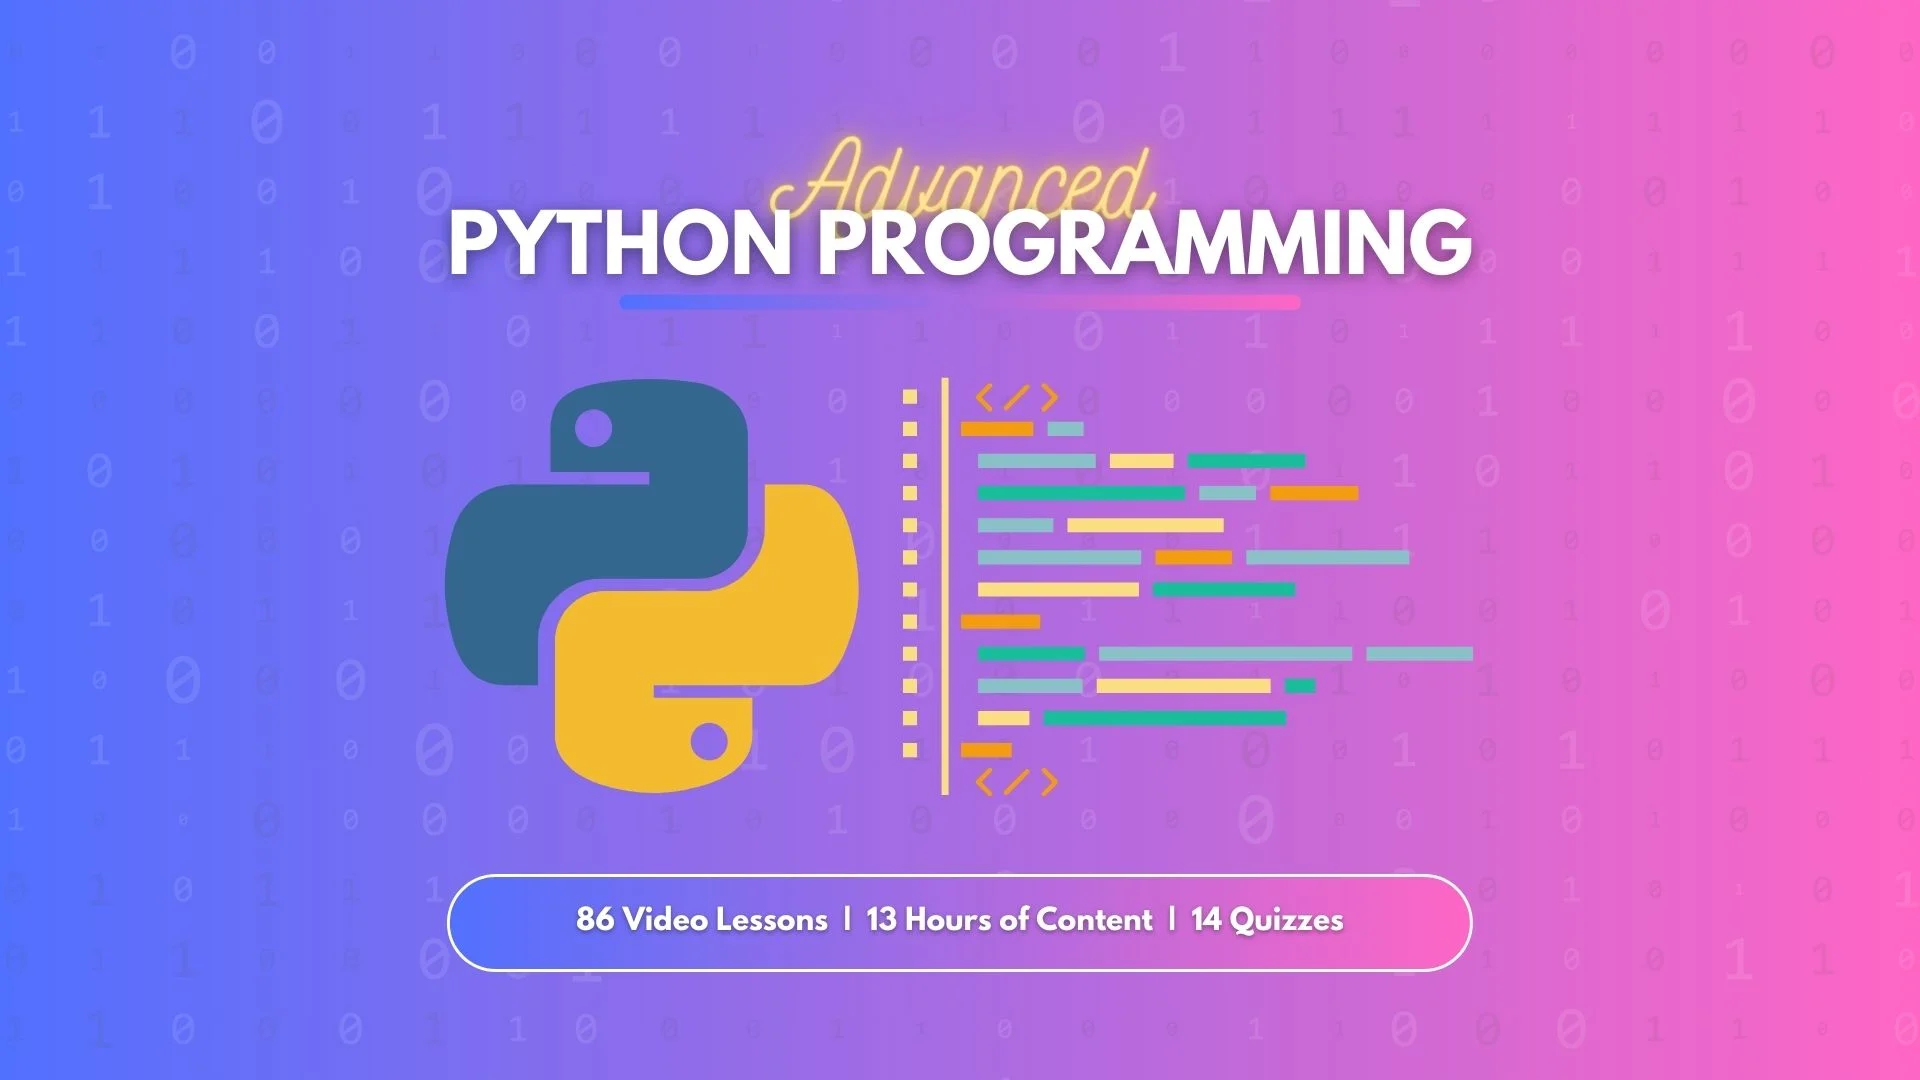 Advanced Python Programming Course Image